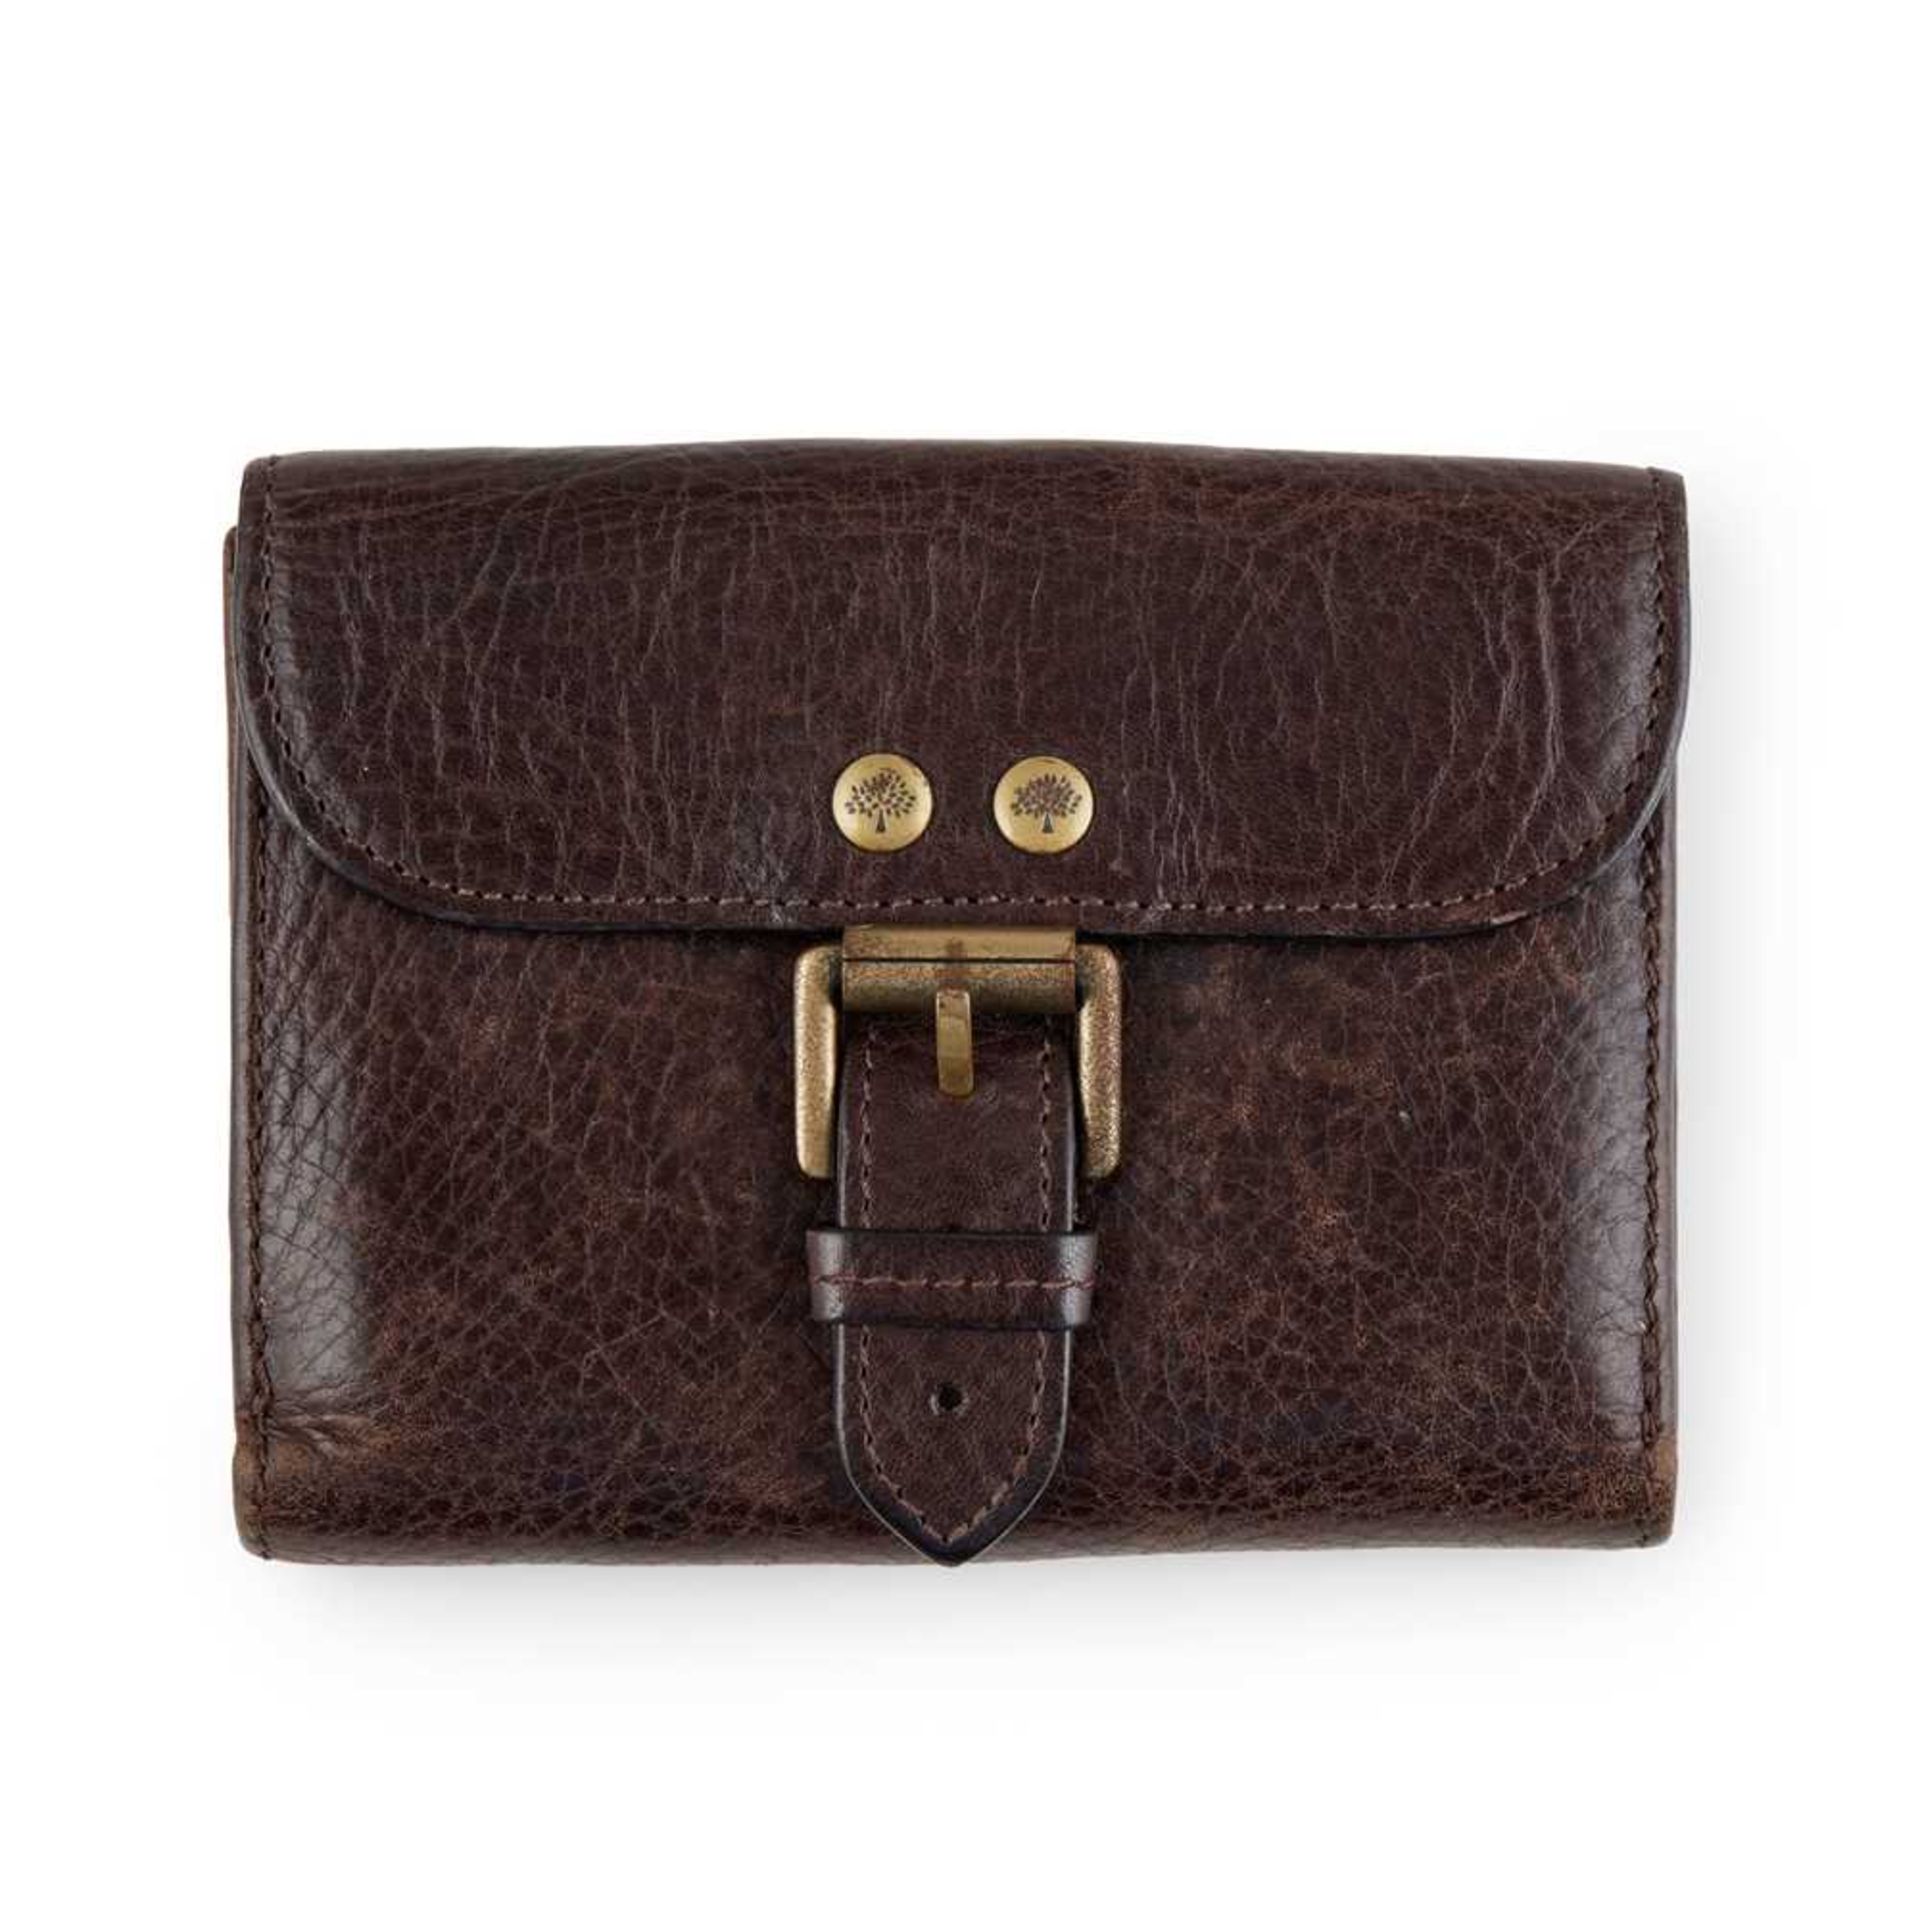 A brown shoulder bag, Mulberry - Image 3 of 3